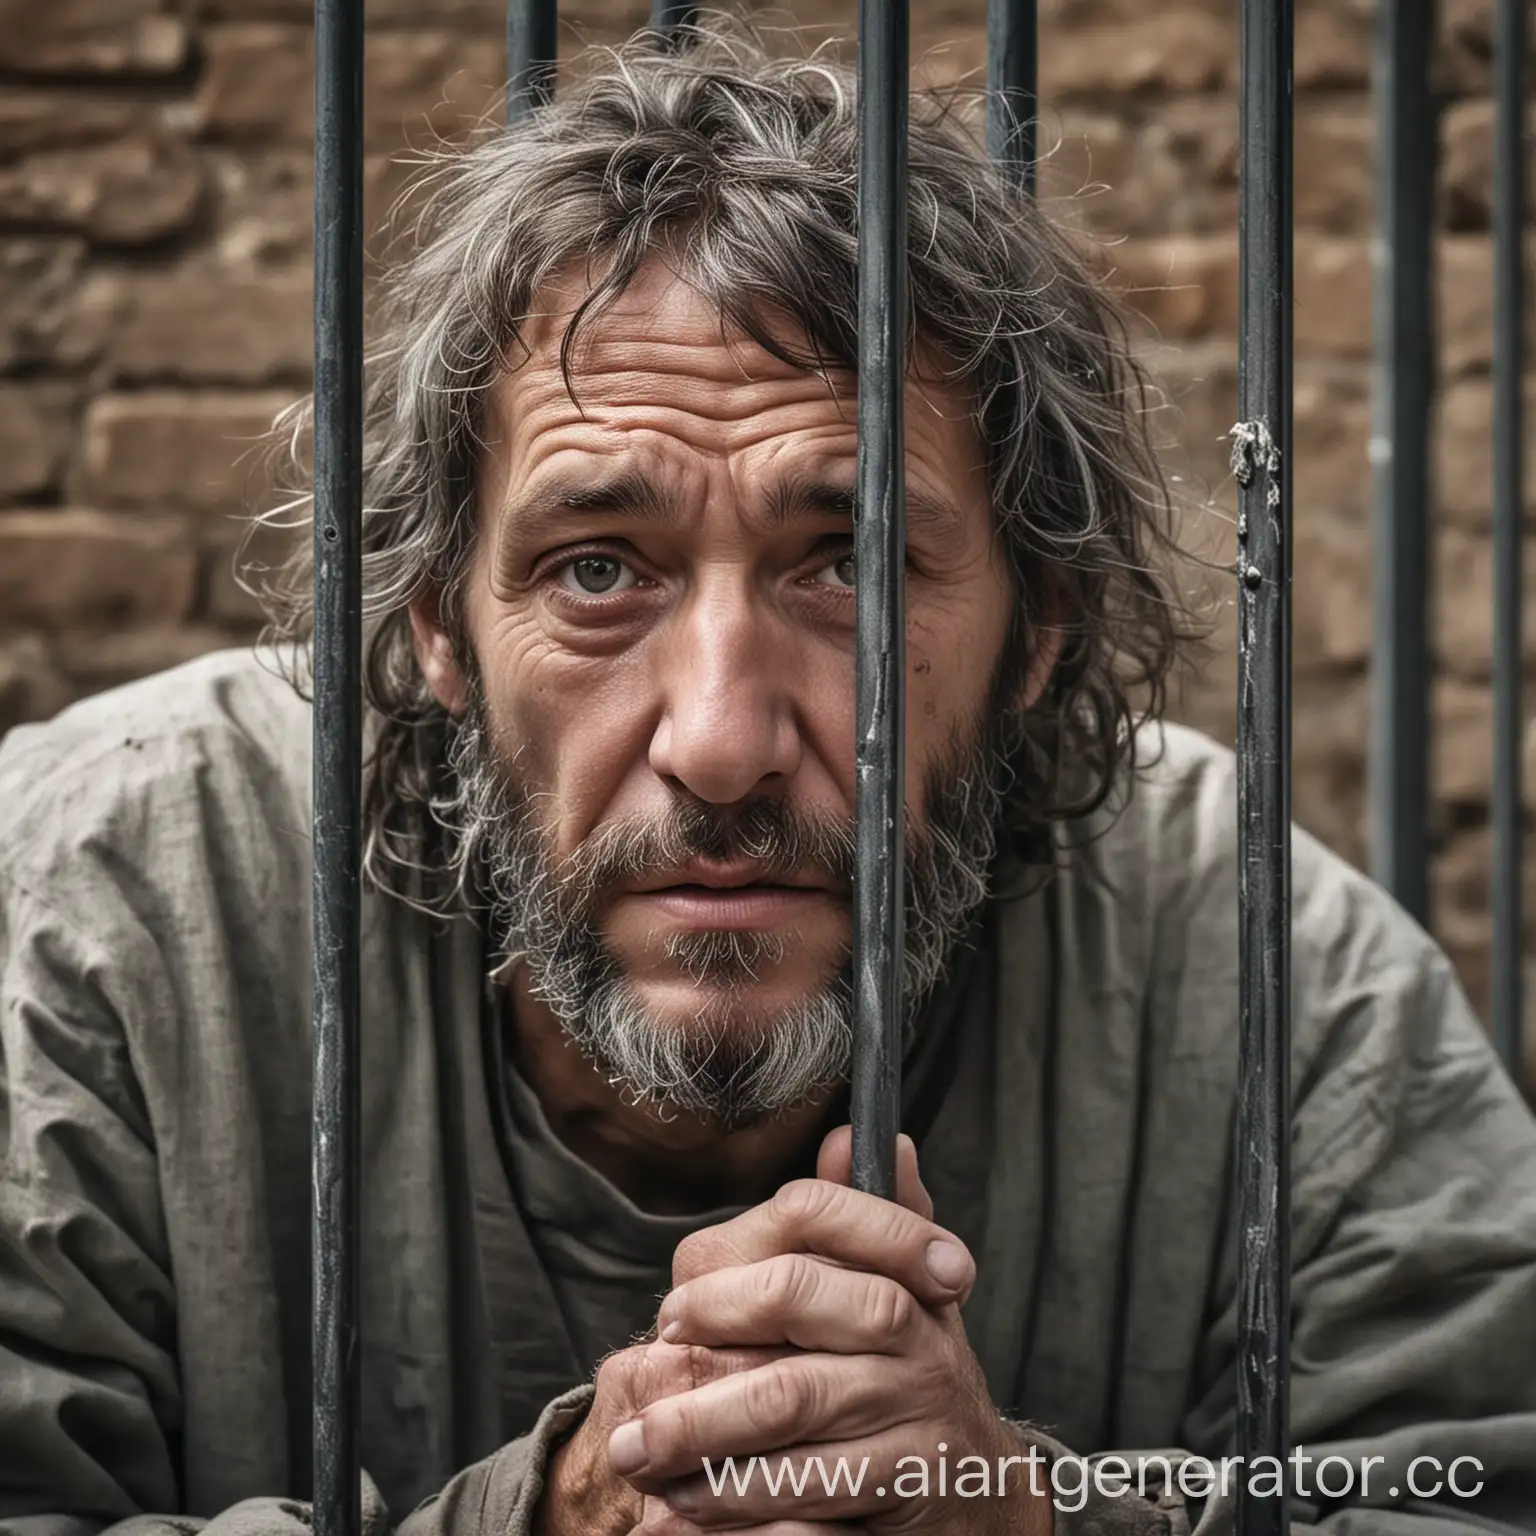 Homeless-Man-Sitting-Behind-Bars-in-Urban-Grit